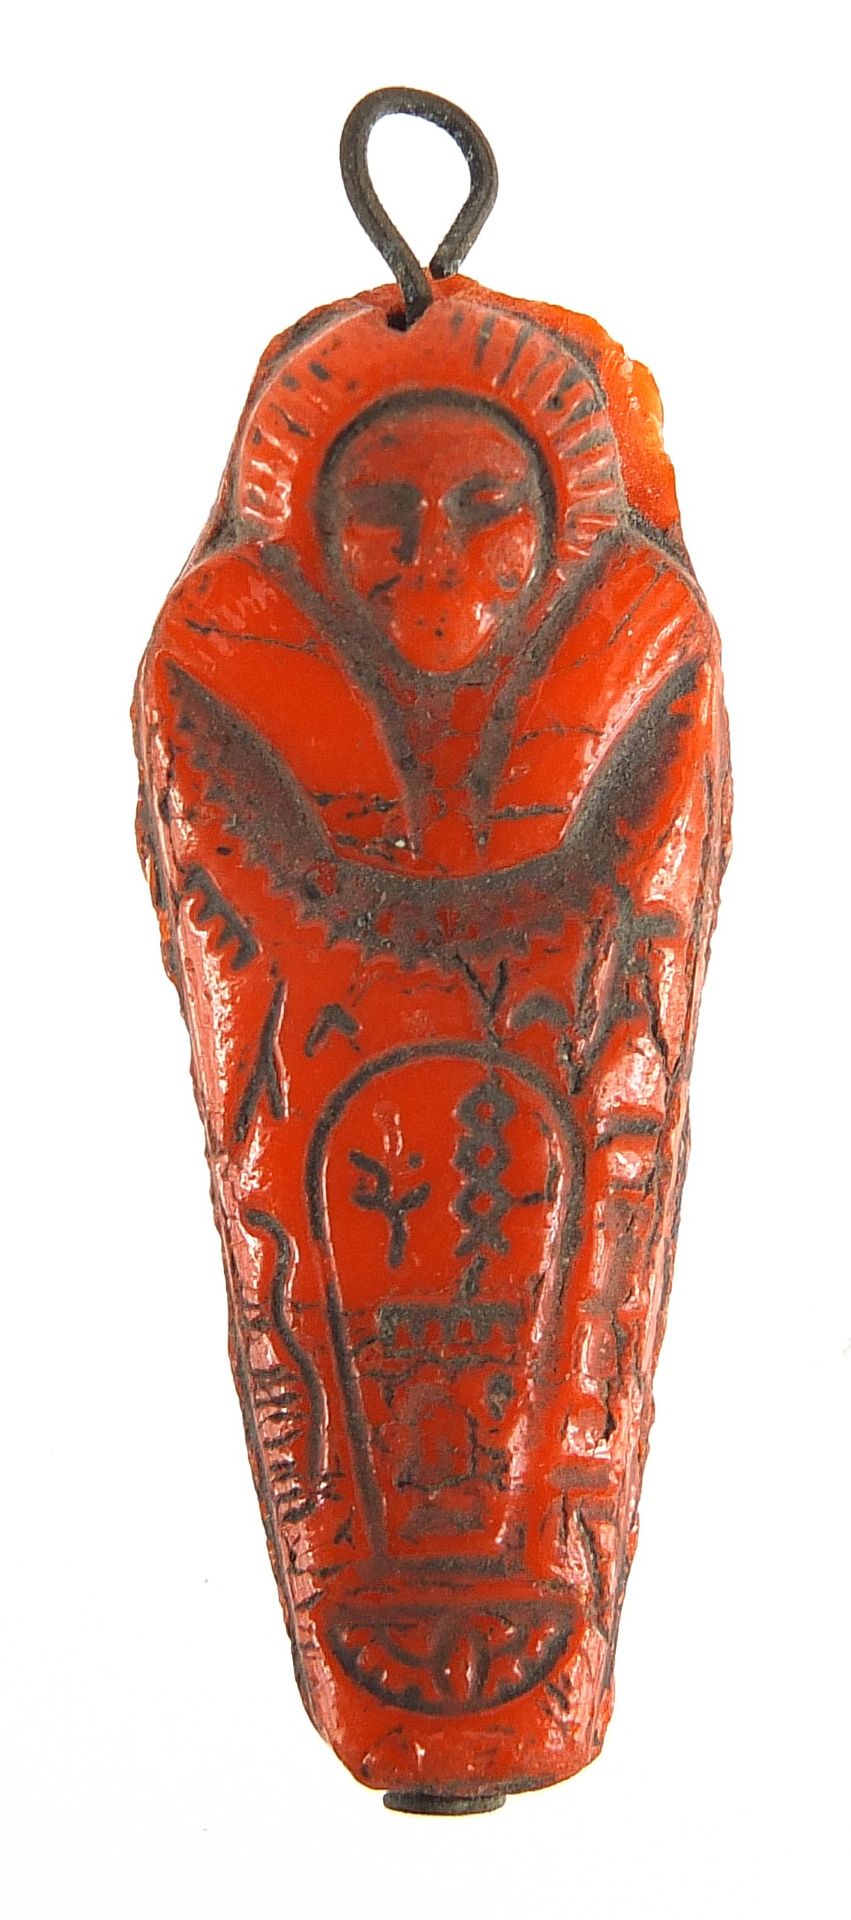 Egyptian ushabti pendant decorated with hieroglyphics, 3.5cm high